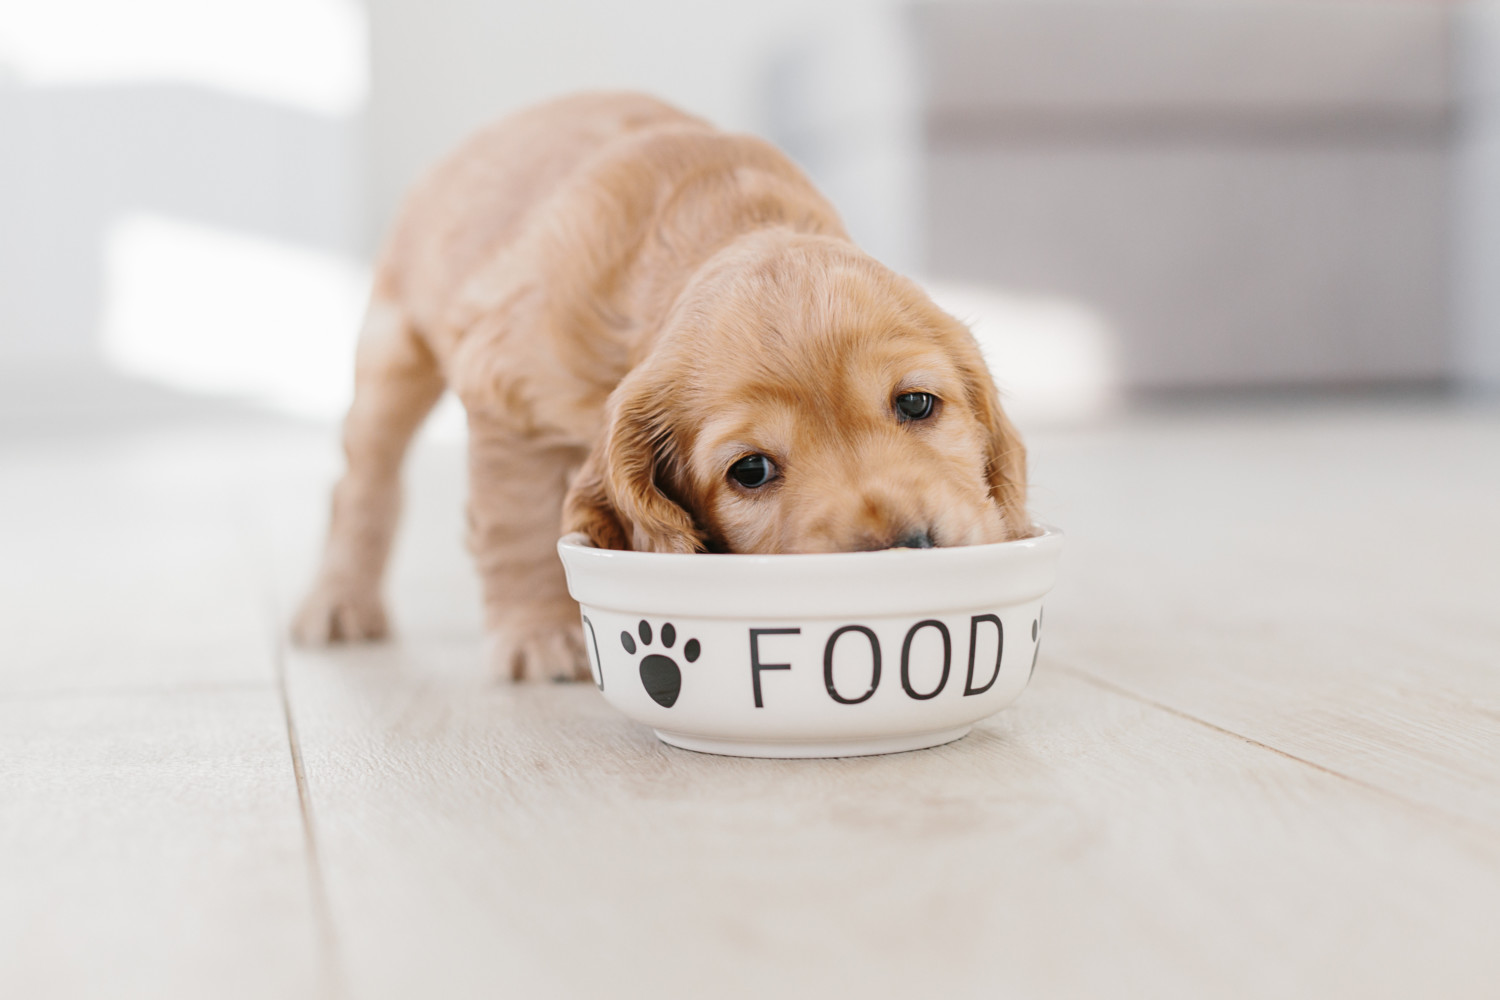 English cocker spaniel puppy eating dog food from ceramic bowl